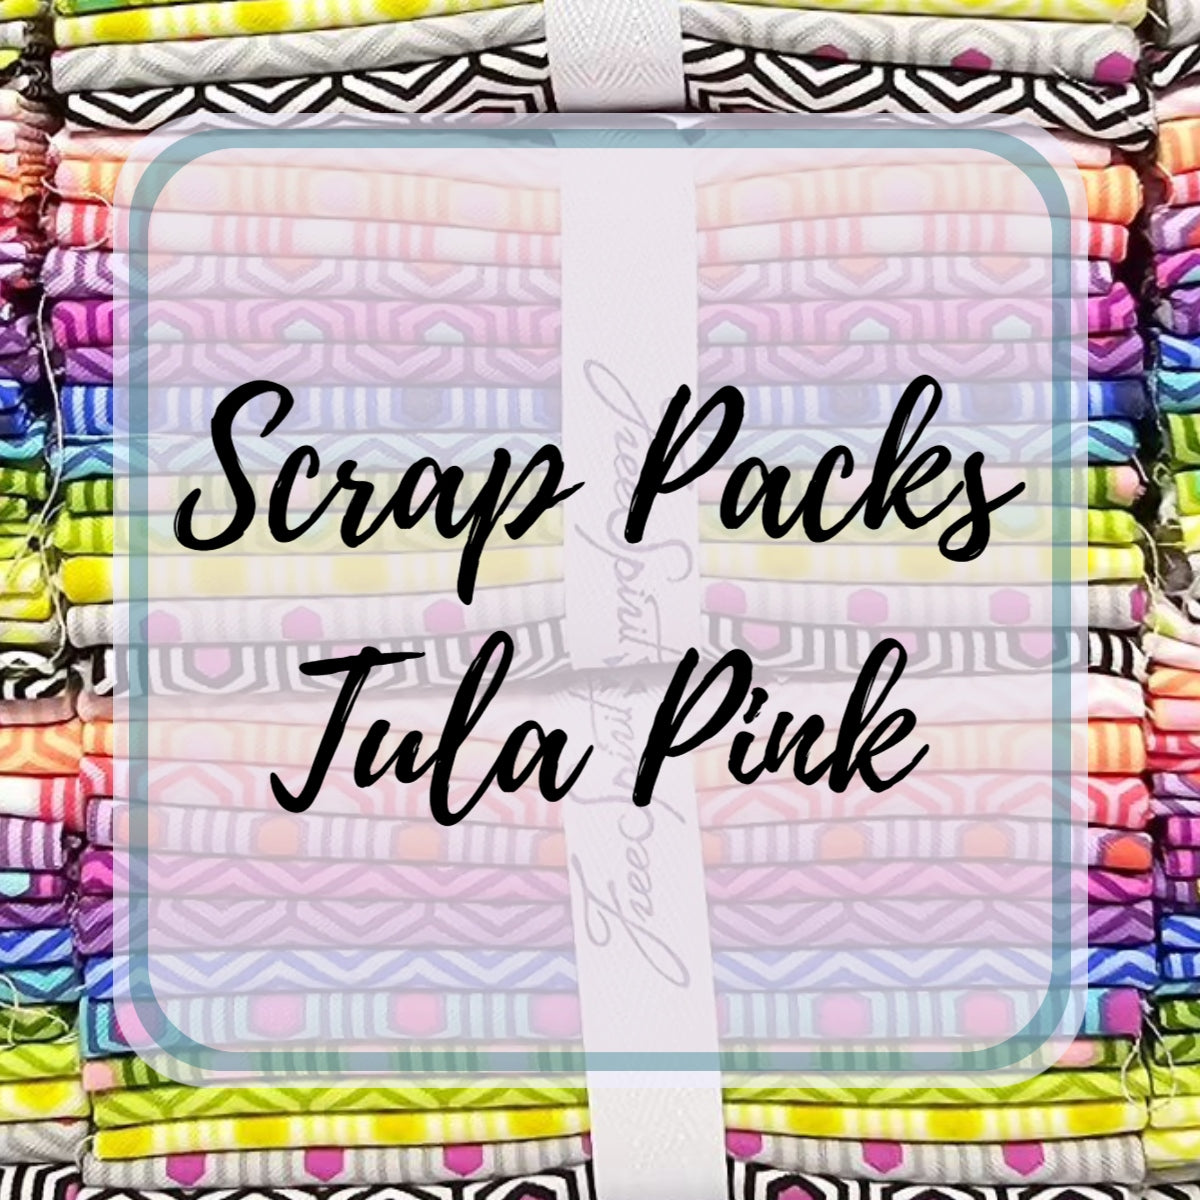 Tula Pink Mystery Scrap Pack - 1 lb.